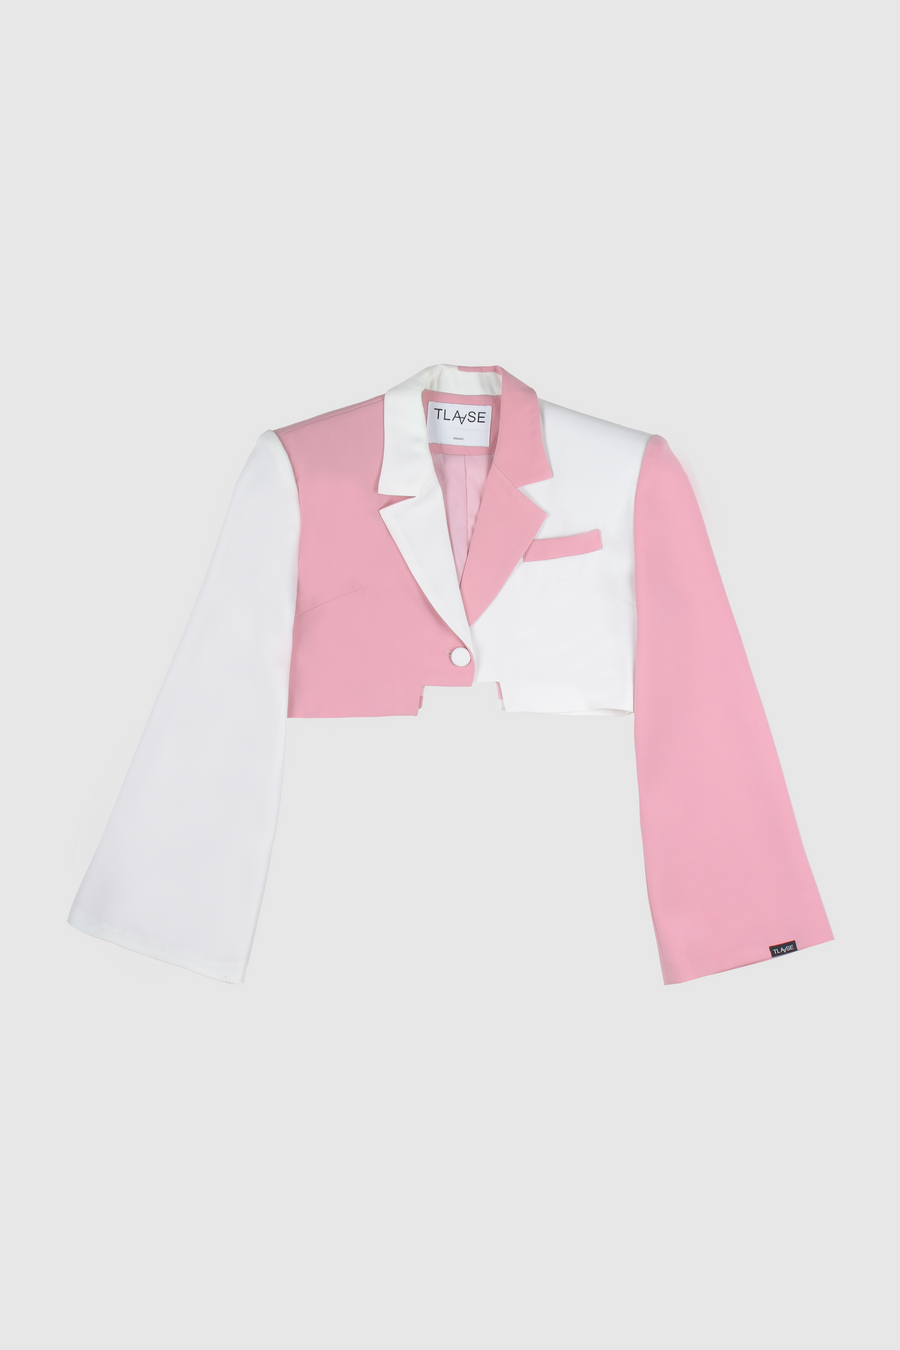 Classic Pink and White Blazer